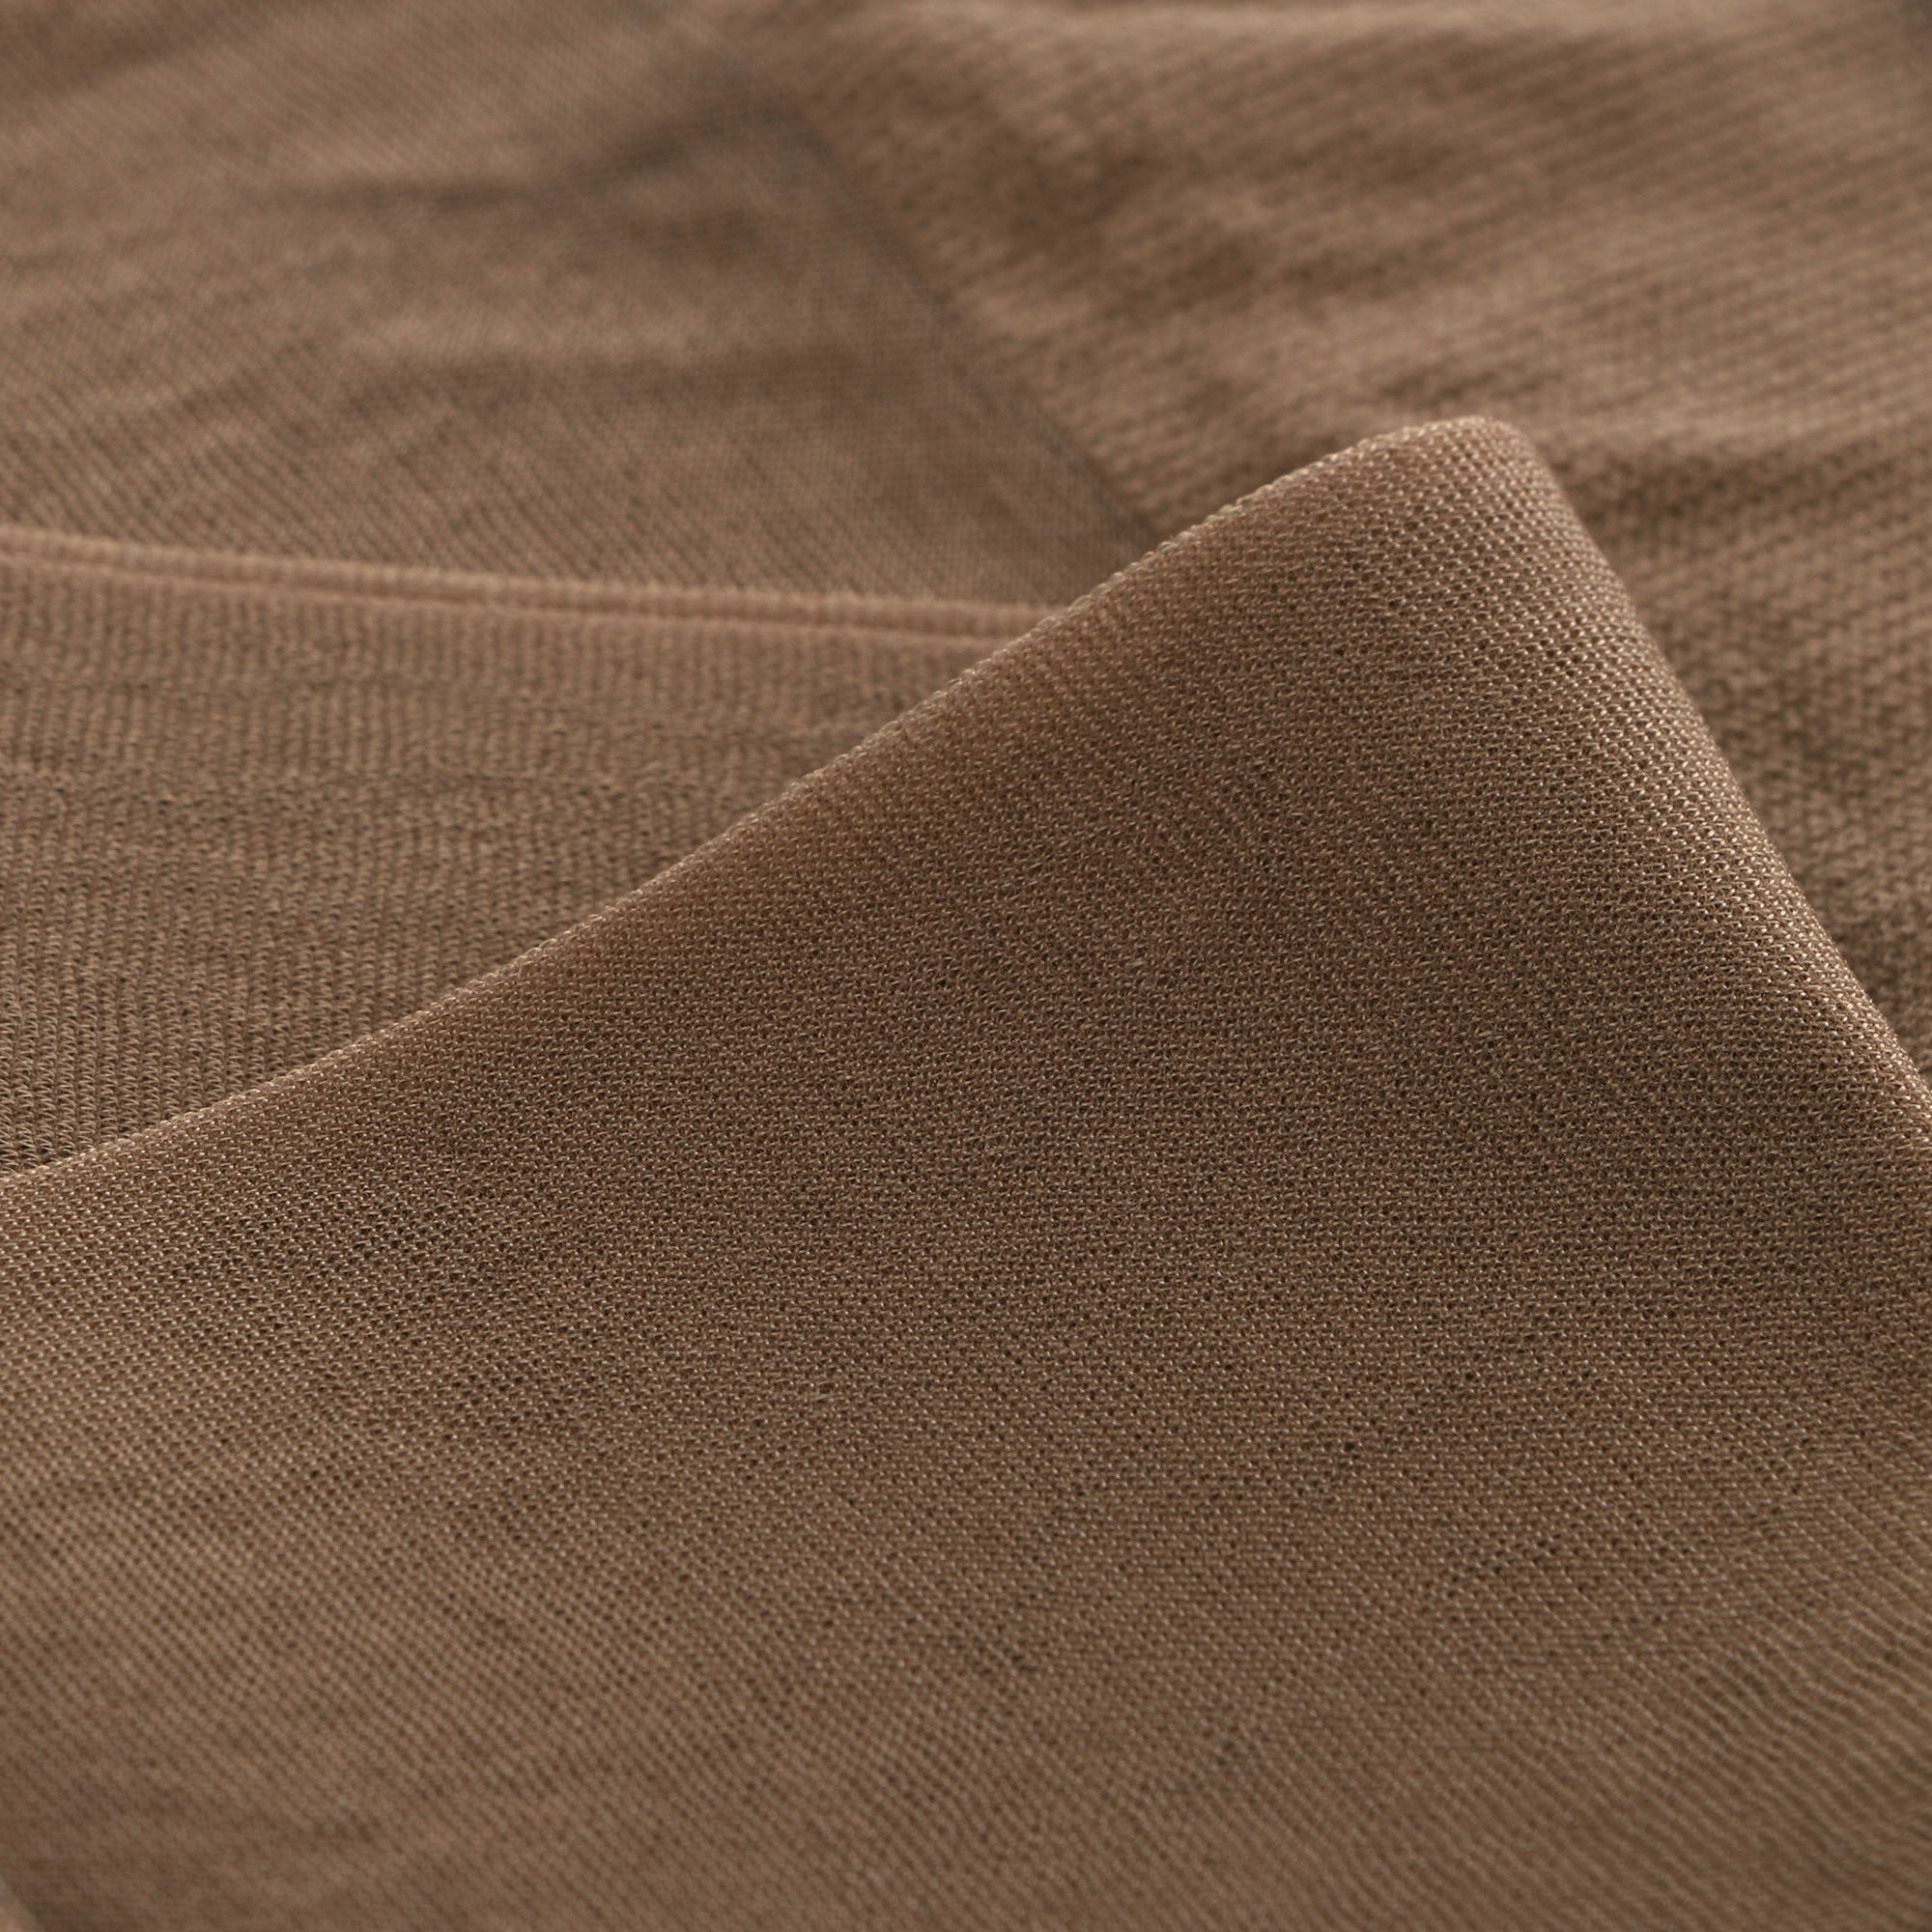 Колготки Sanpellegrino Support 40 Comfort Daino L, цвет коричневый, размер 3 - фото 2